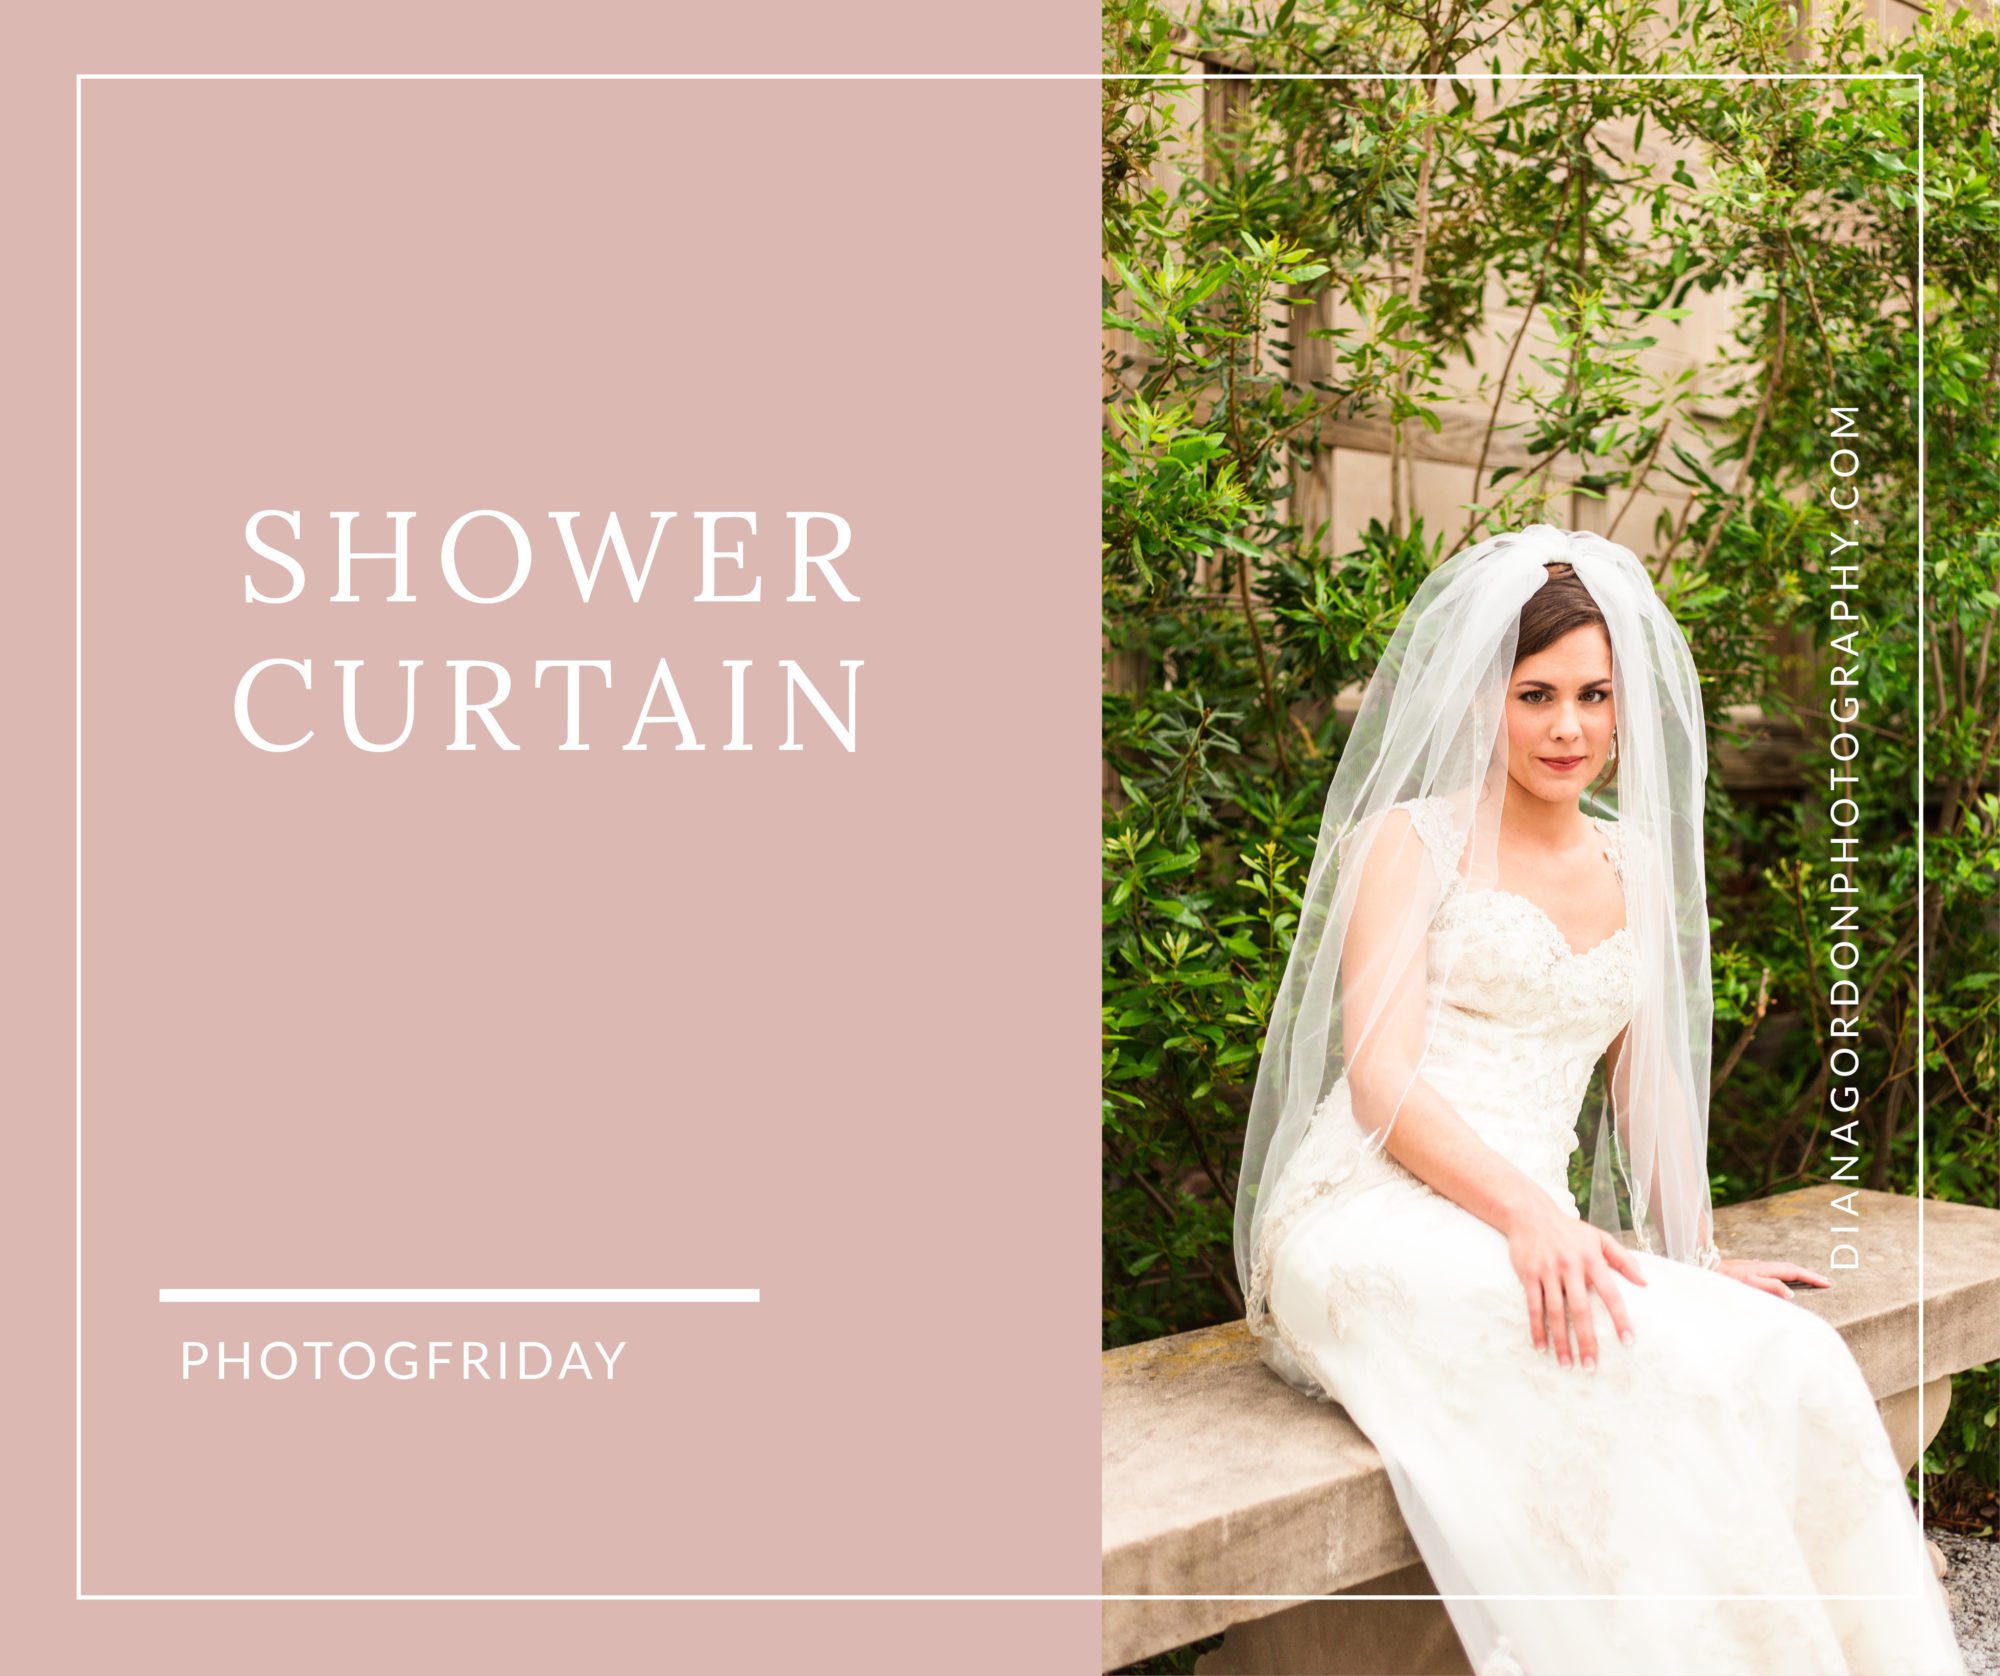 shower curtain, Newport news, Virginia, Diana Gordon Photography, photo